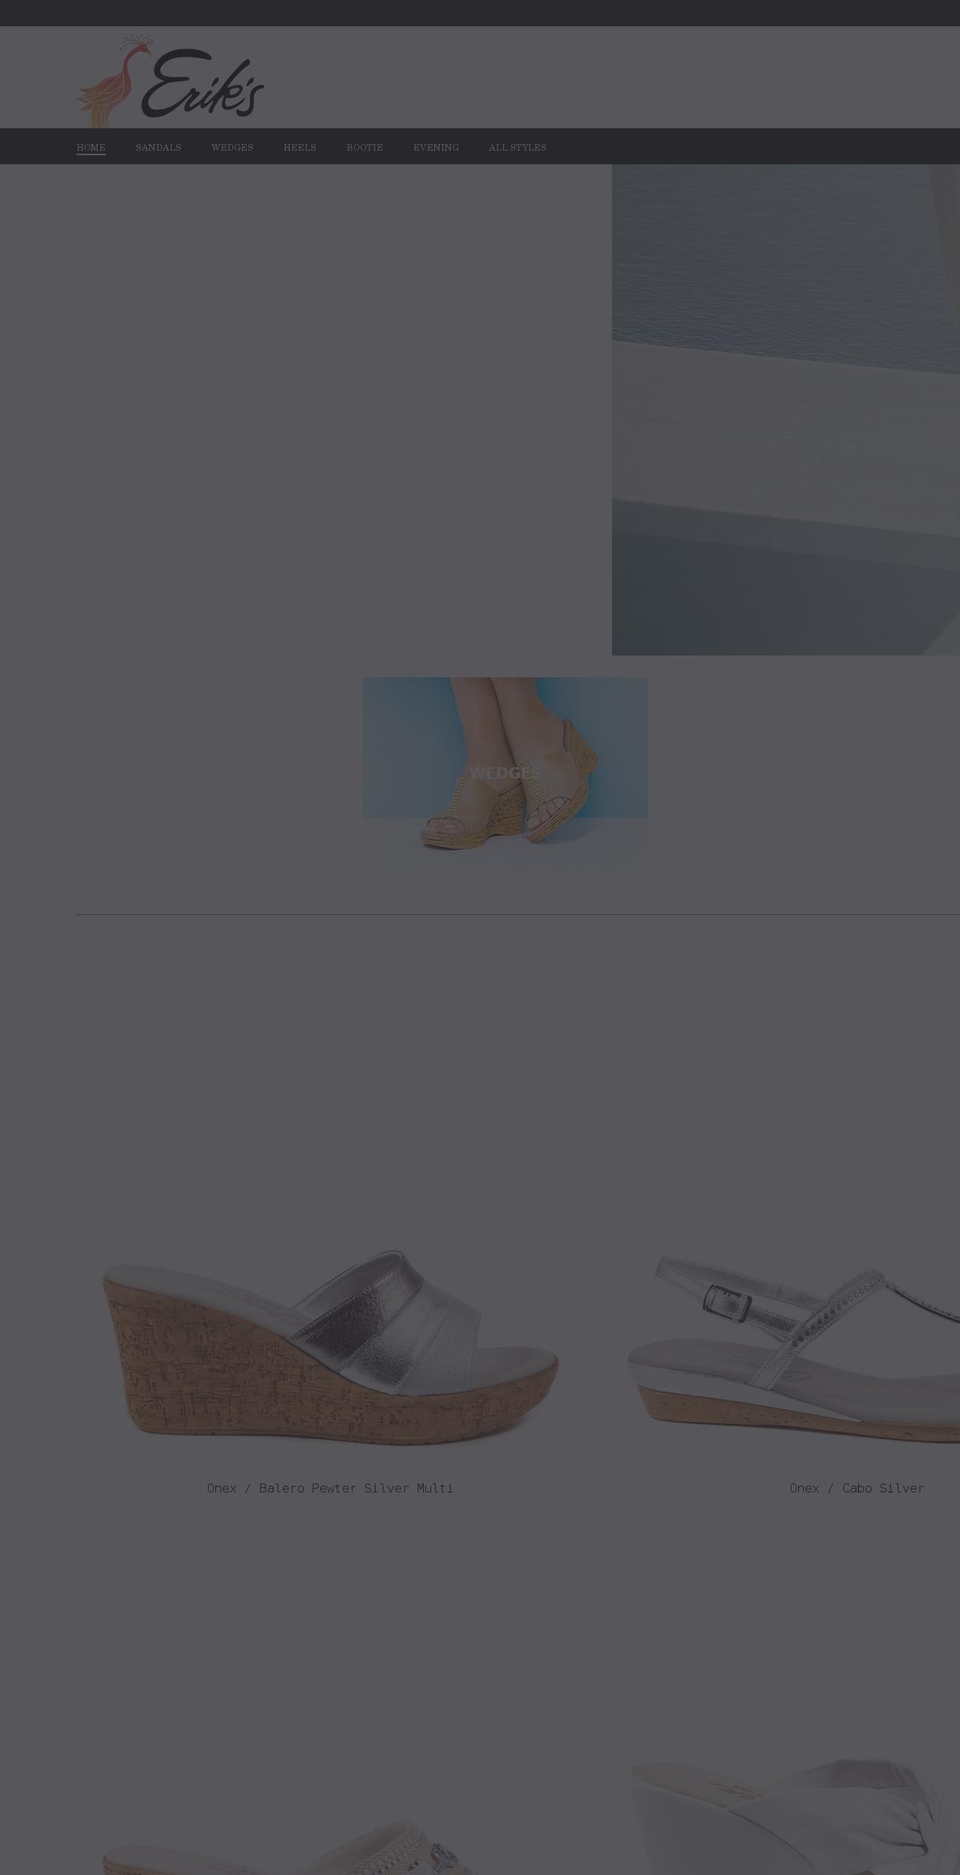 shoes Shopify theme site example eriksshoes.com